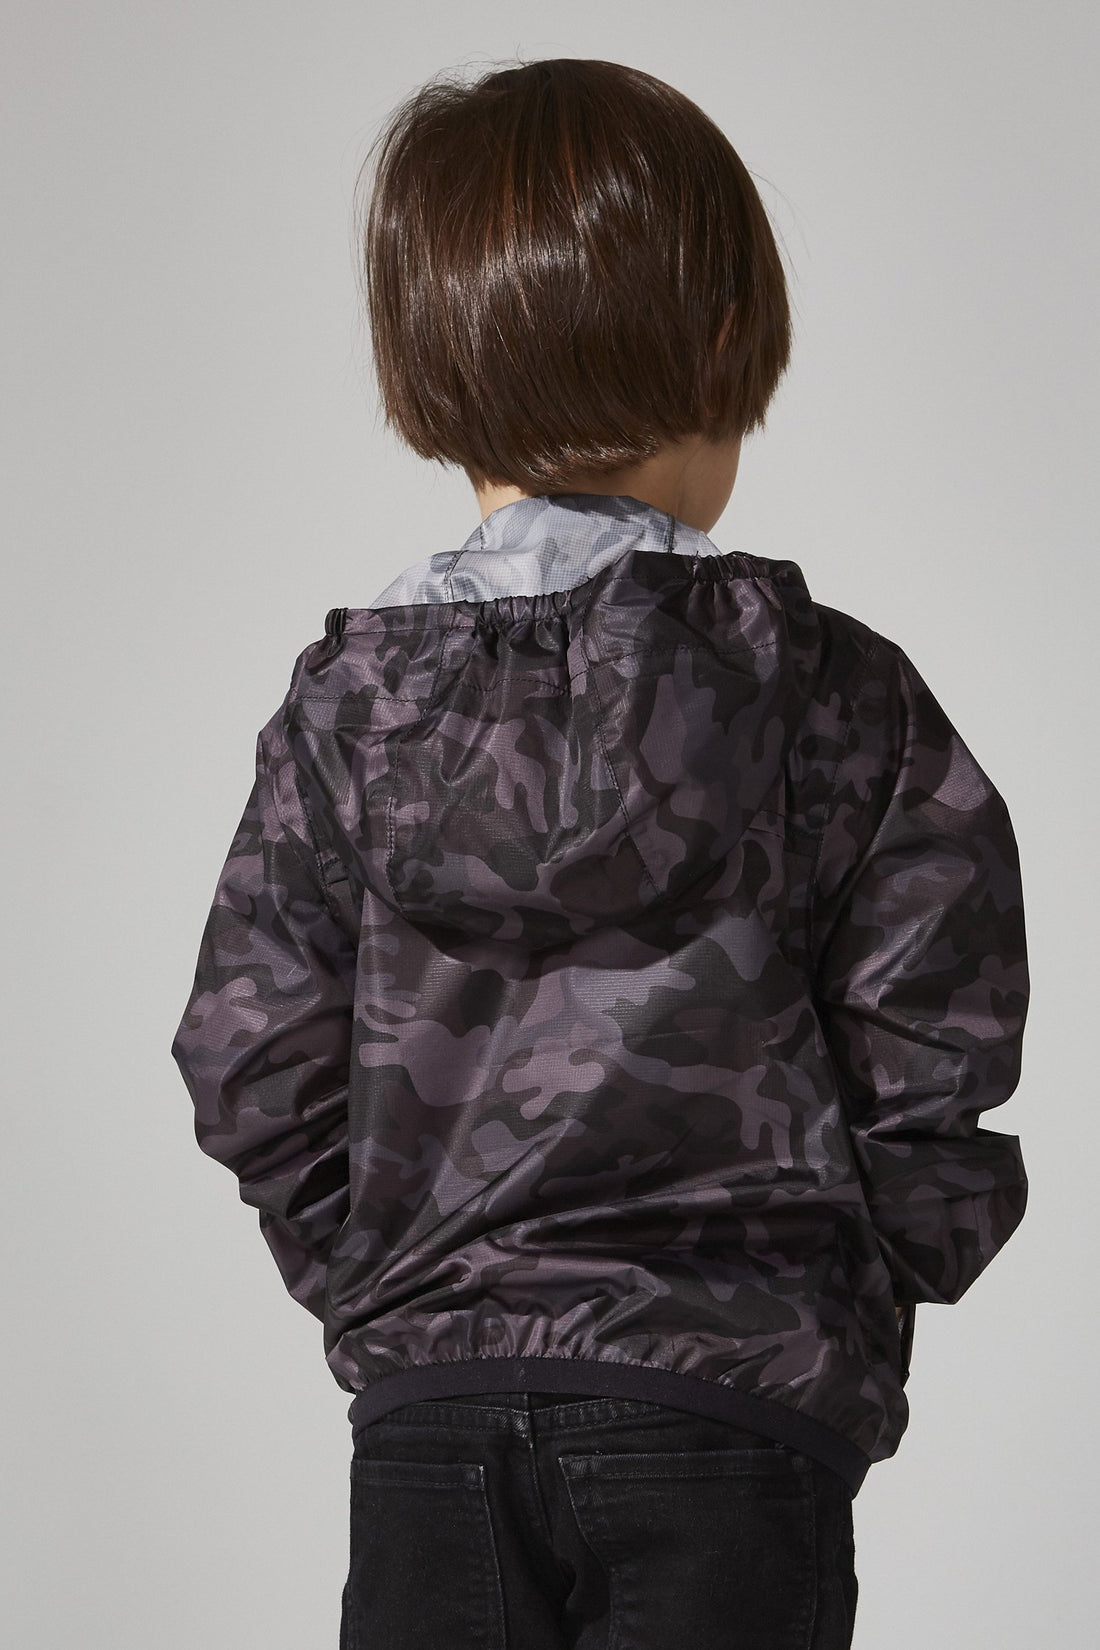 Sam Print - Kids Black Camo Full Zip Packable Rain Jacket